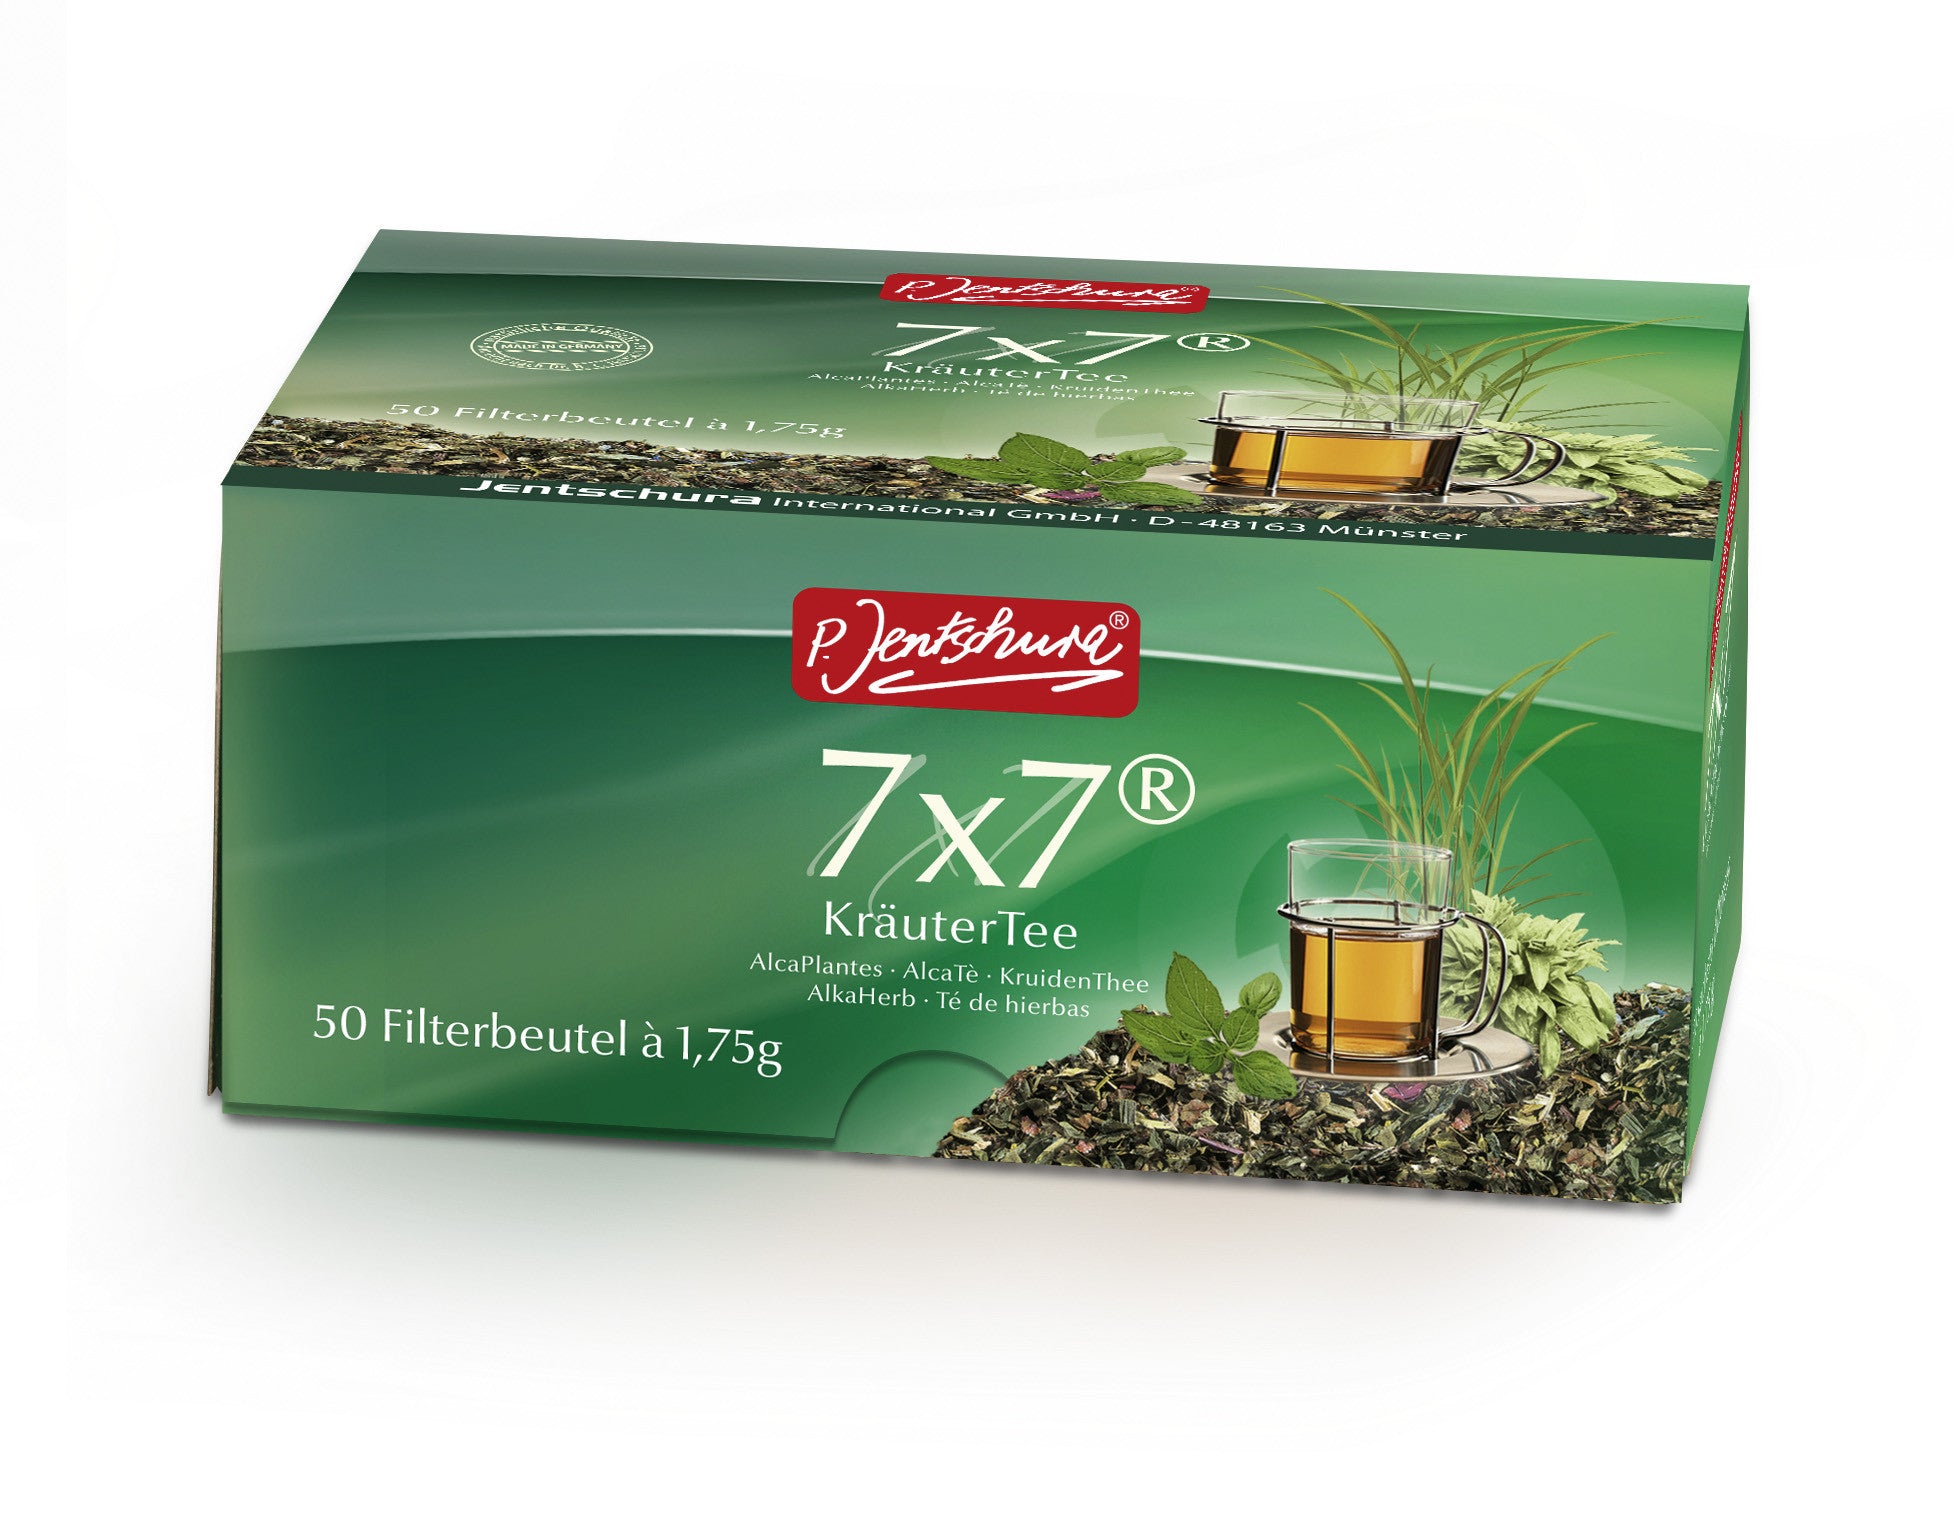 Alkaline Herbal Tea (7x7 AlkaHerb) by P. Jentschura